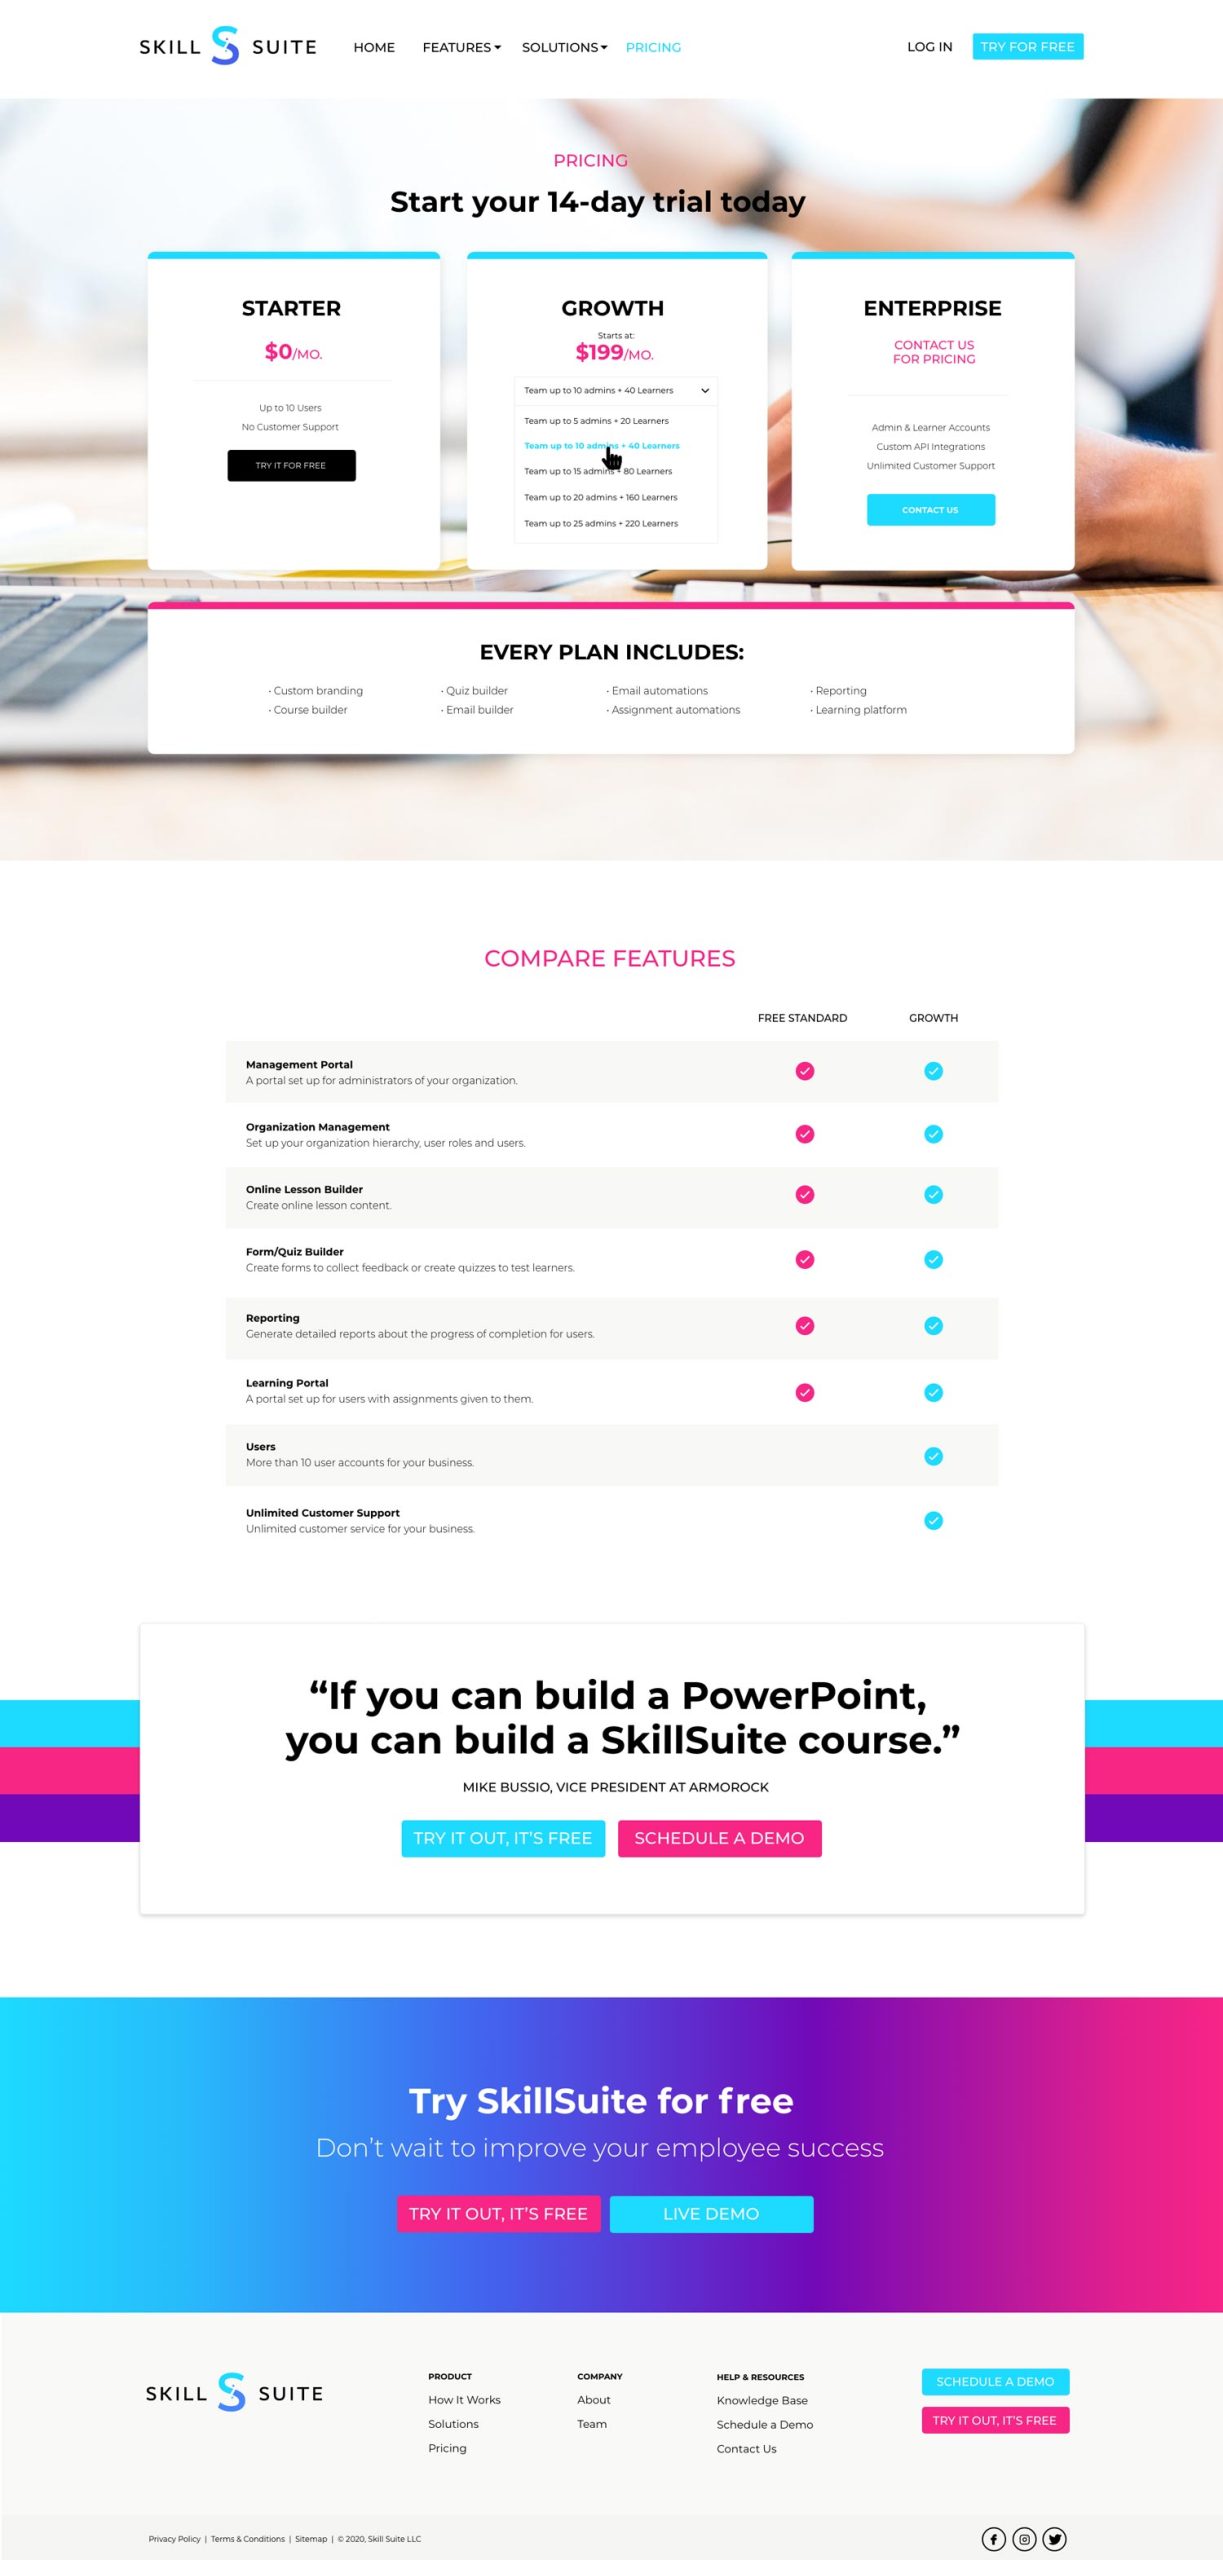 SkillSuite - Pricing, Website - New v2